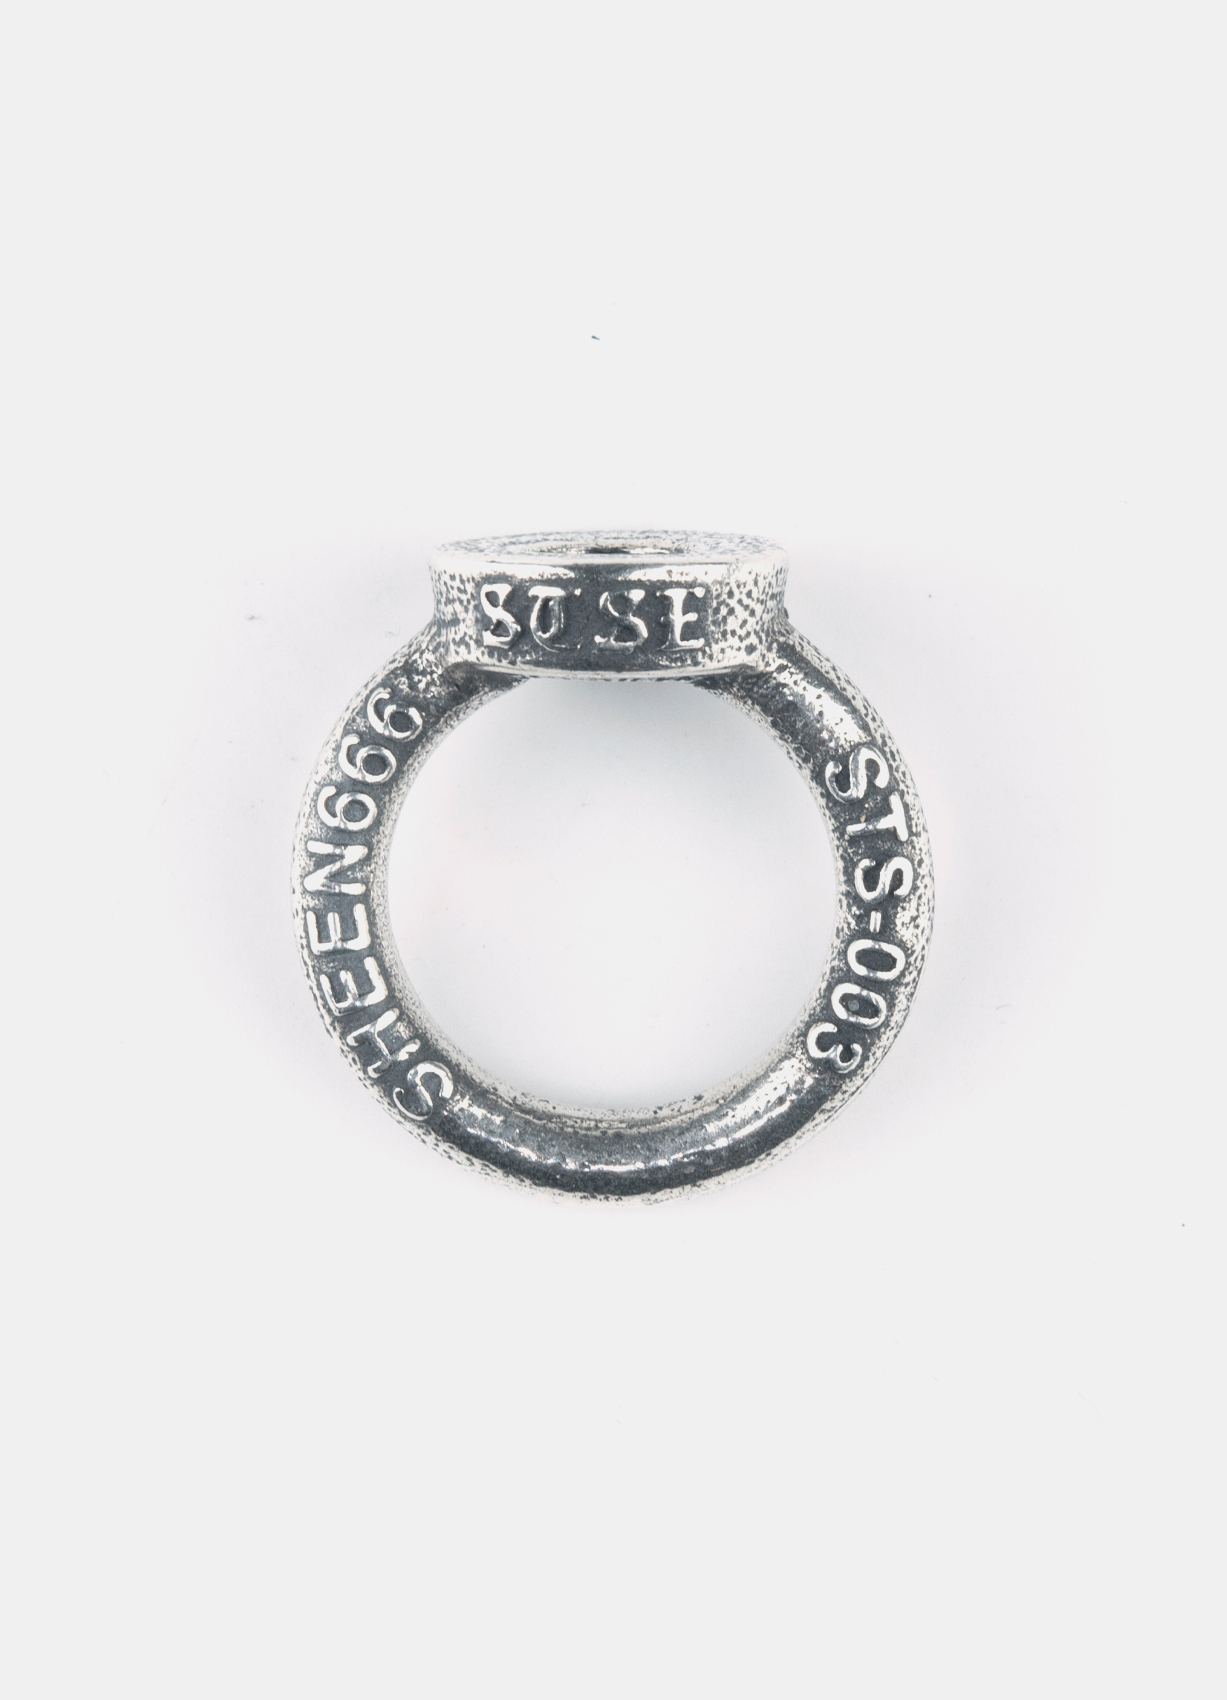 Industrial Series STS003 Eye Nut Ring